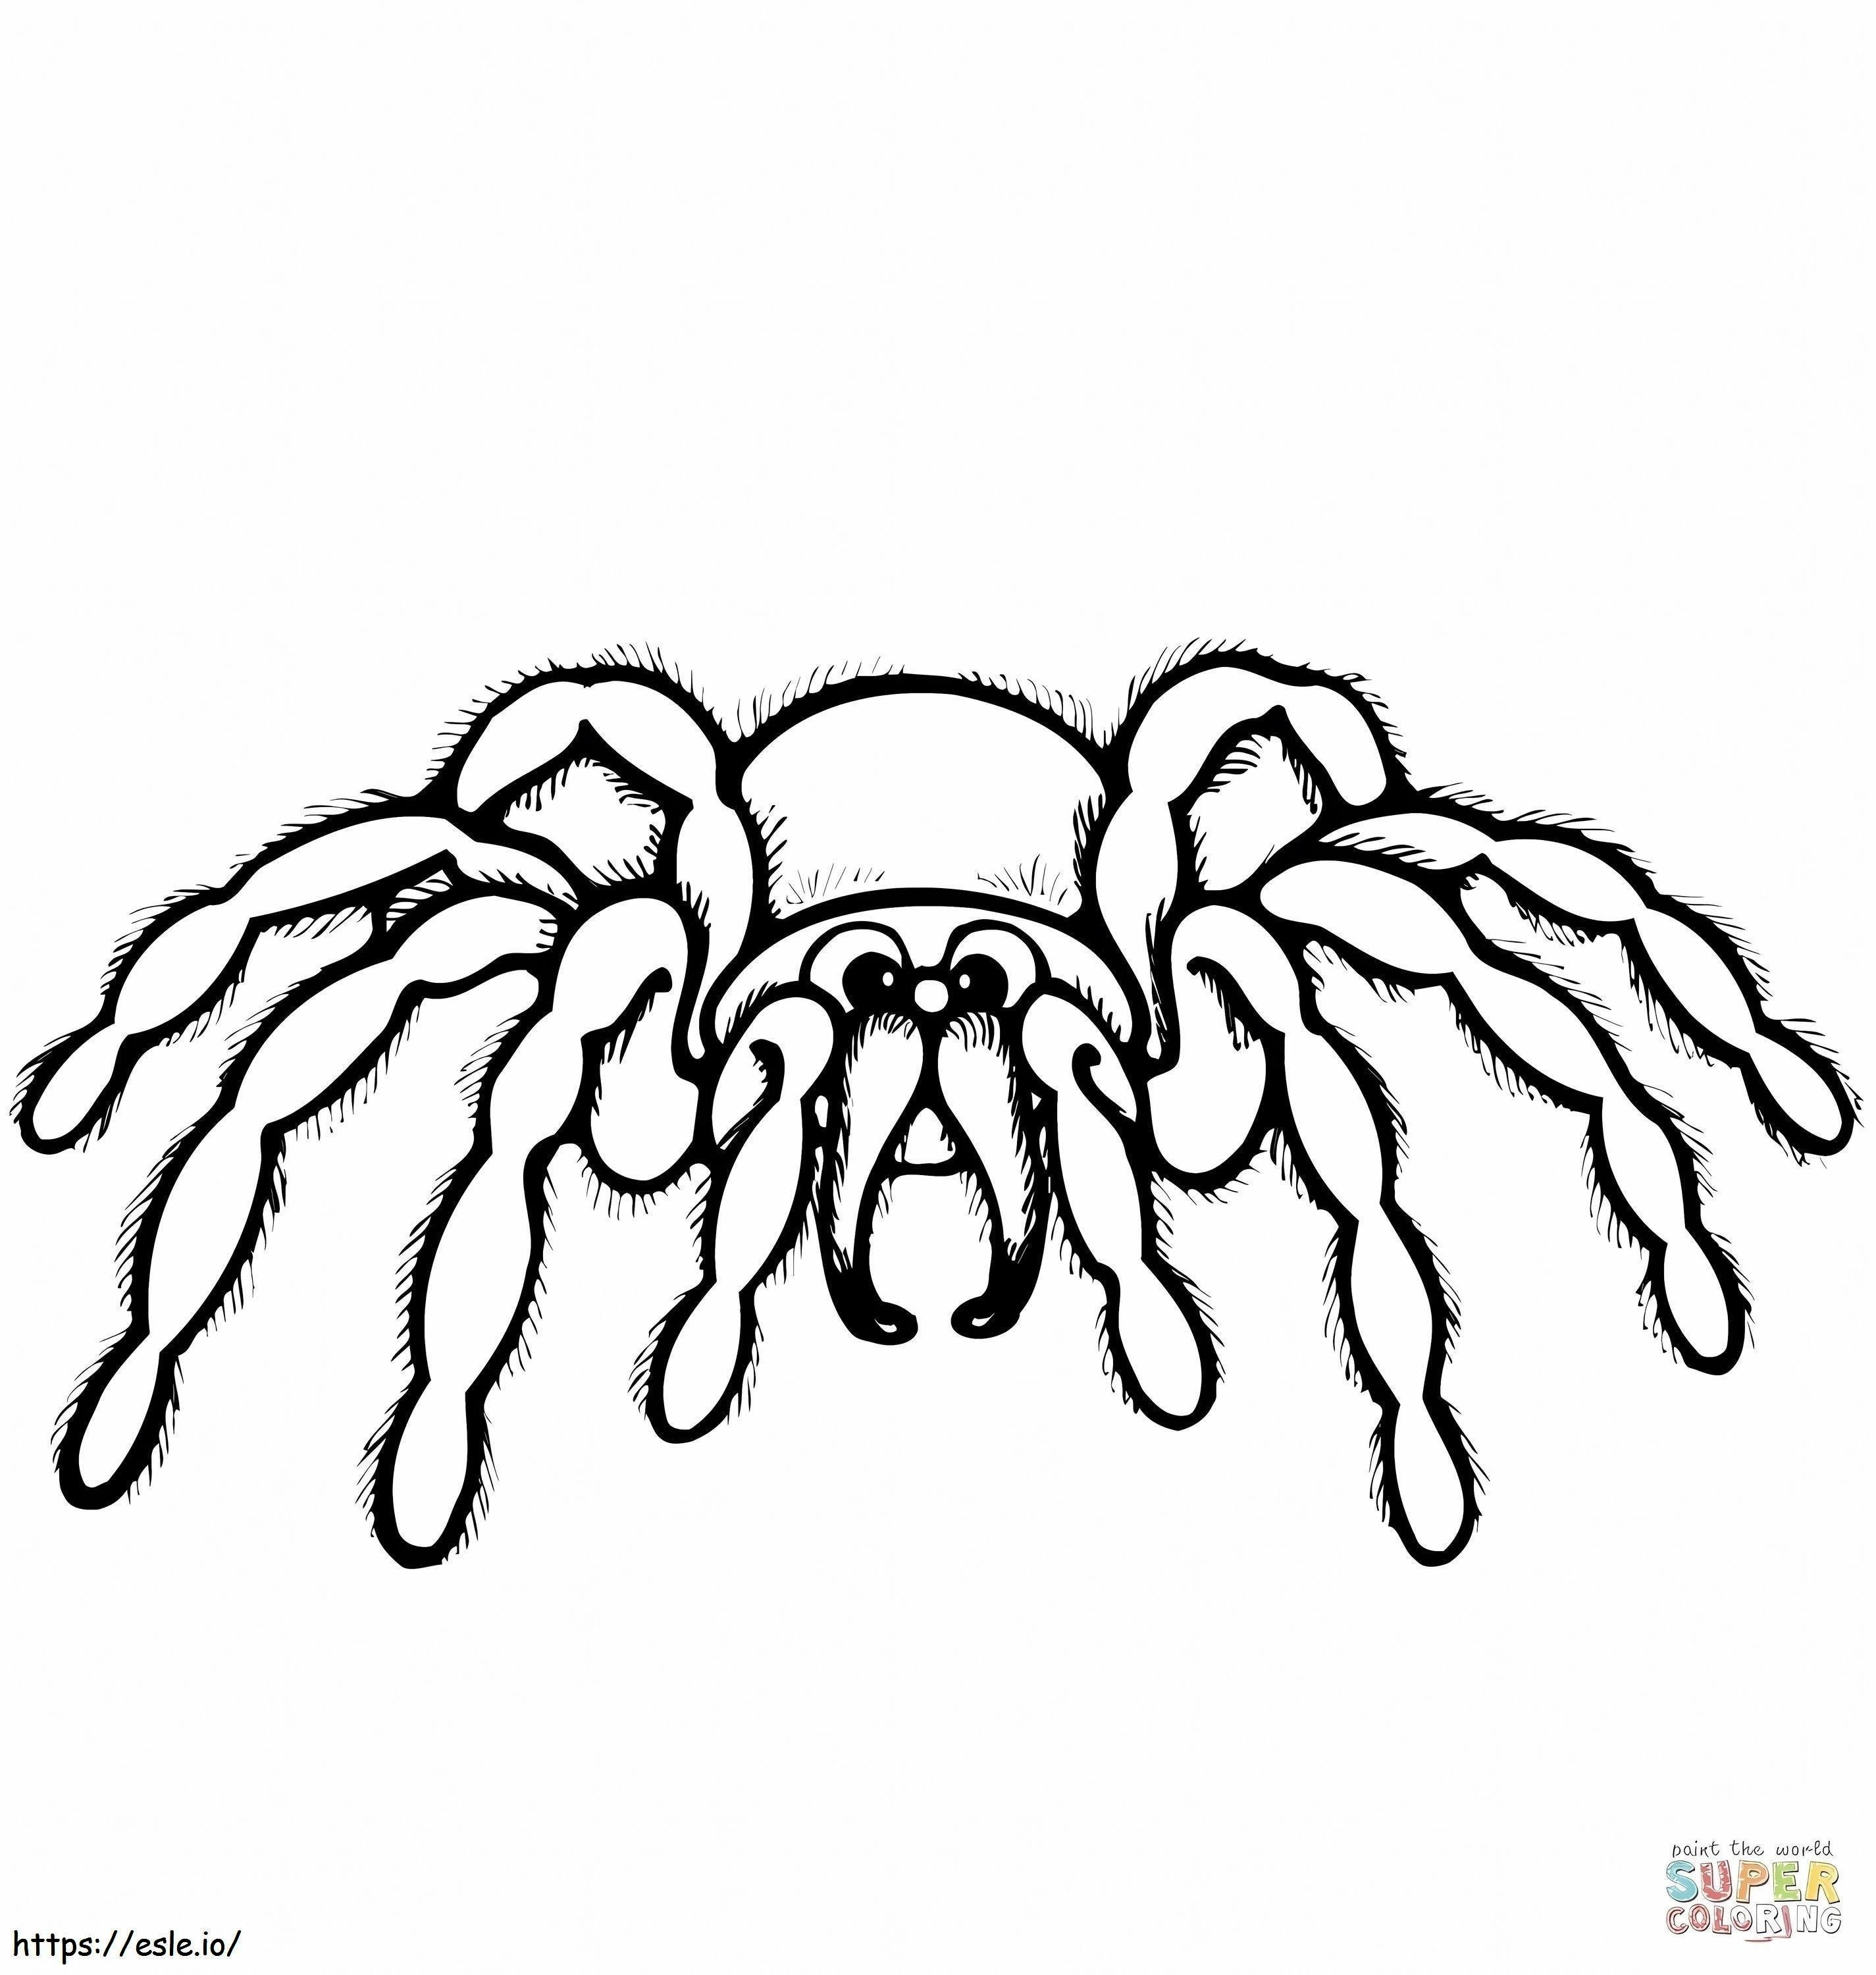 1545183392_Cartoon Spider coloring page